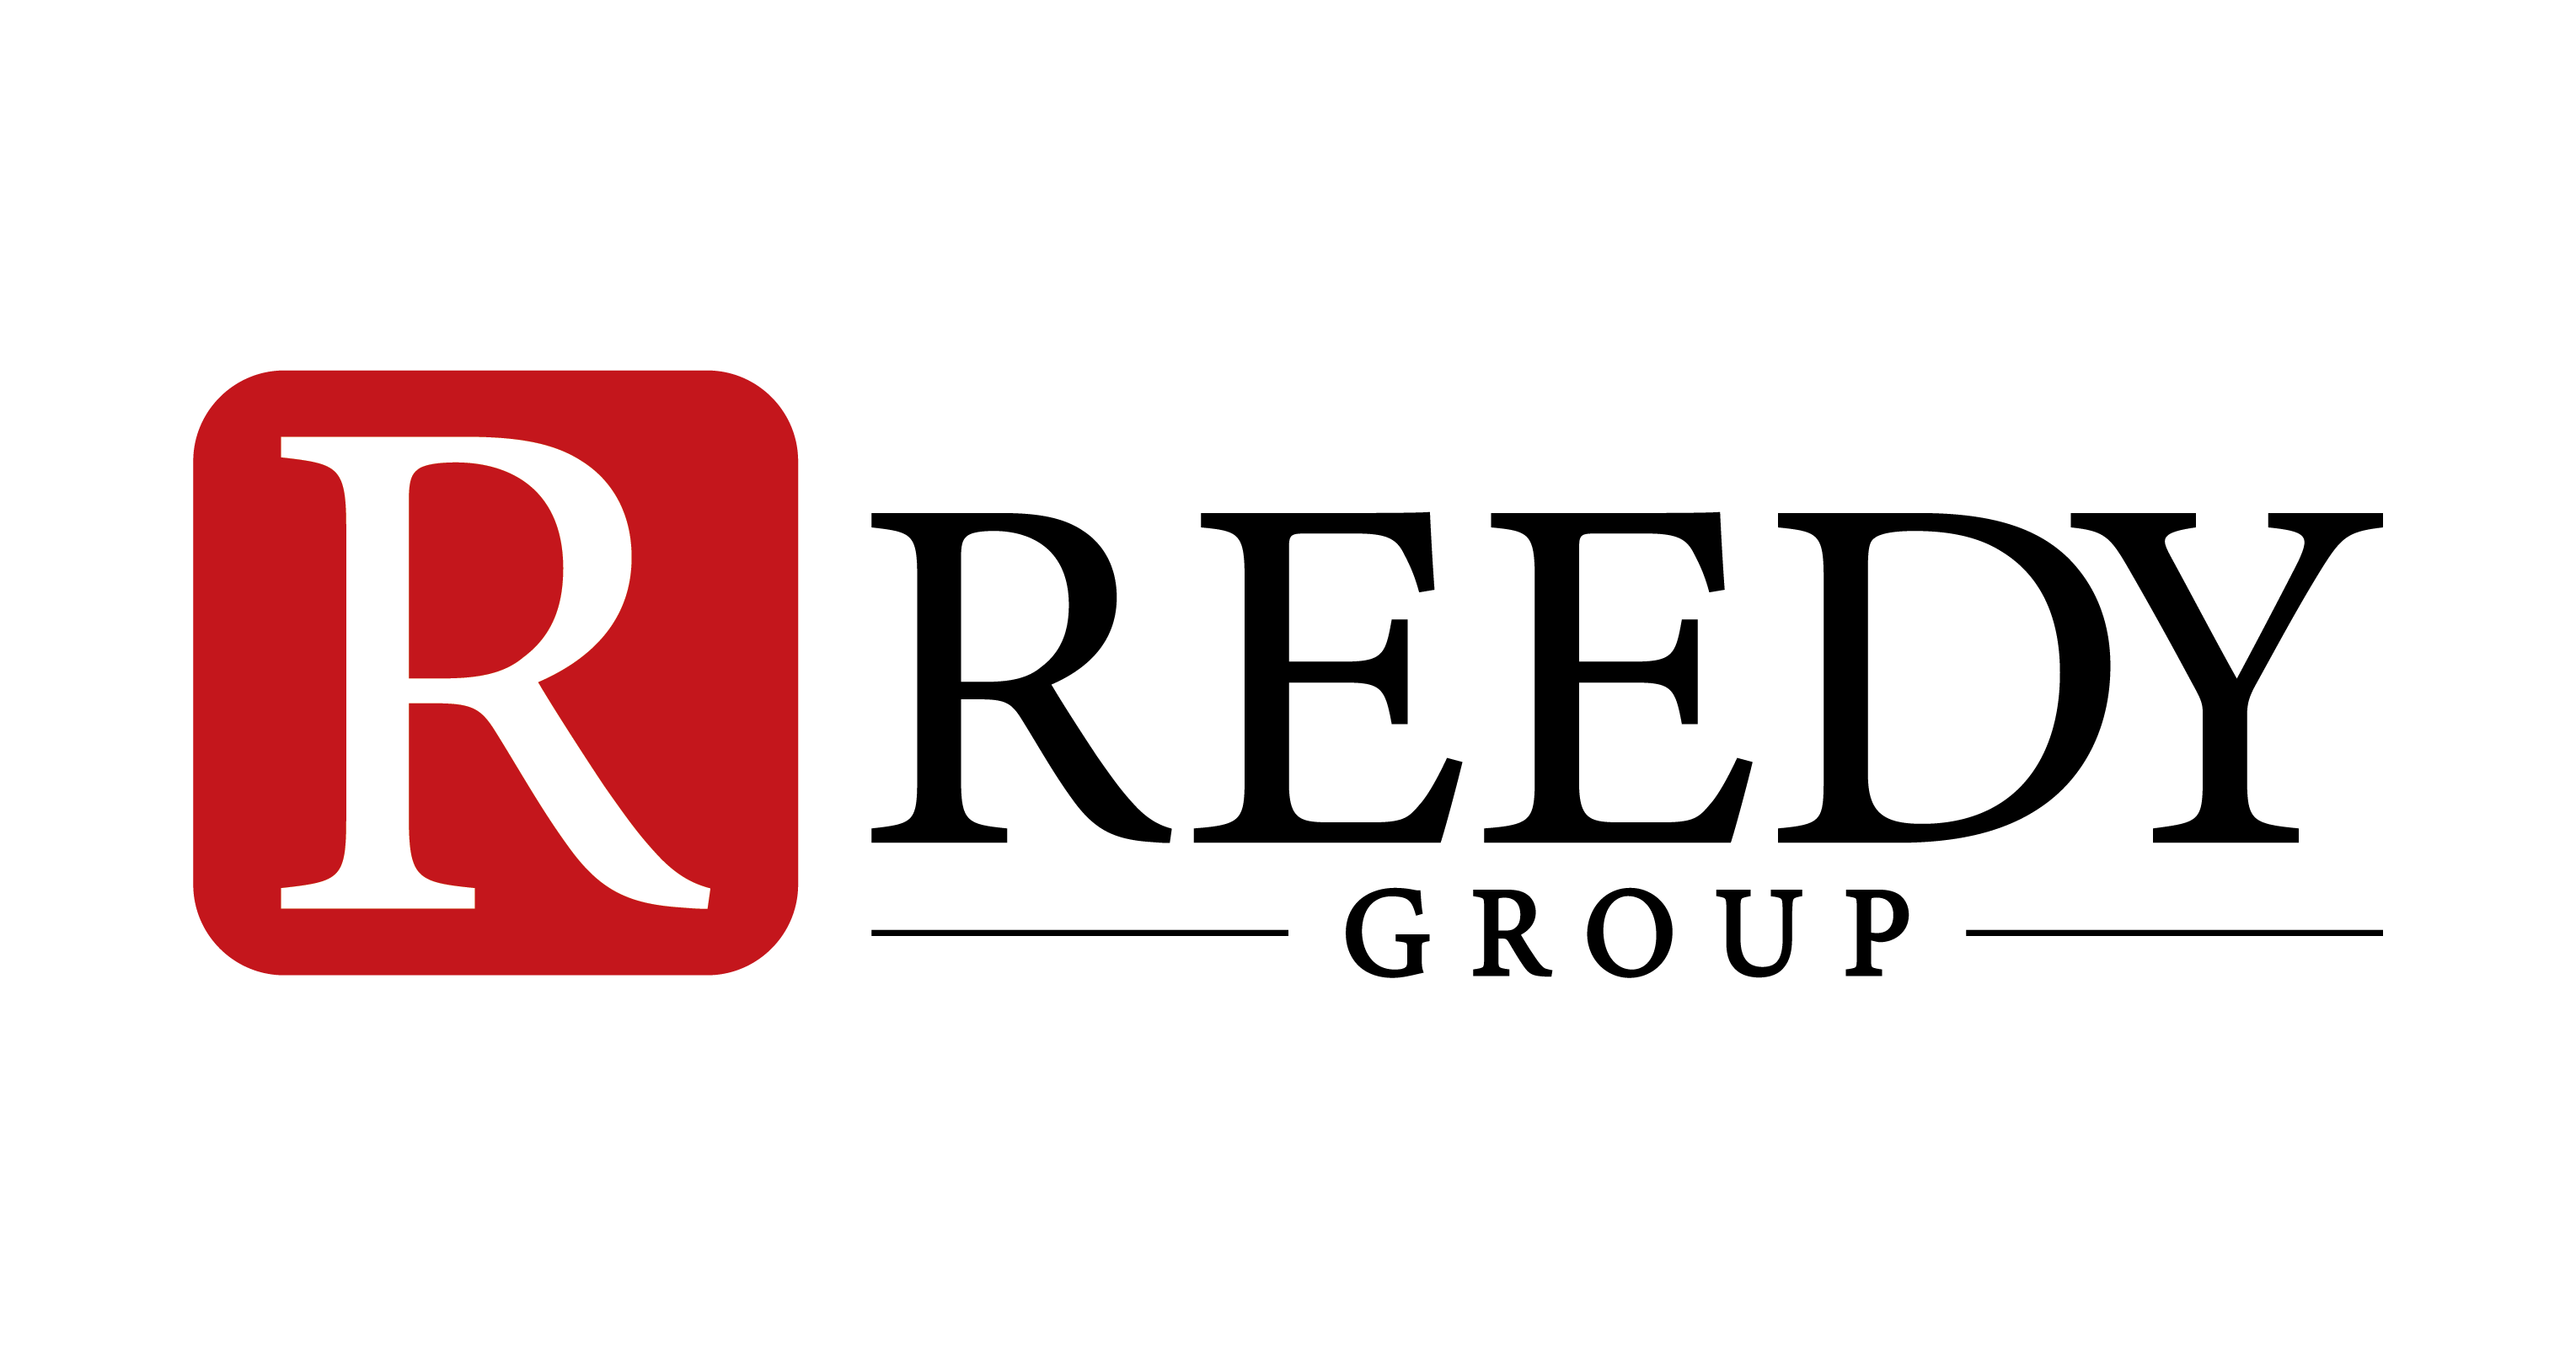 Reedy Group development